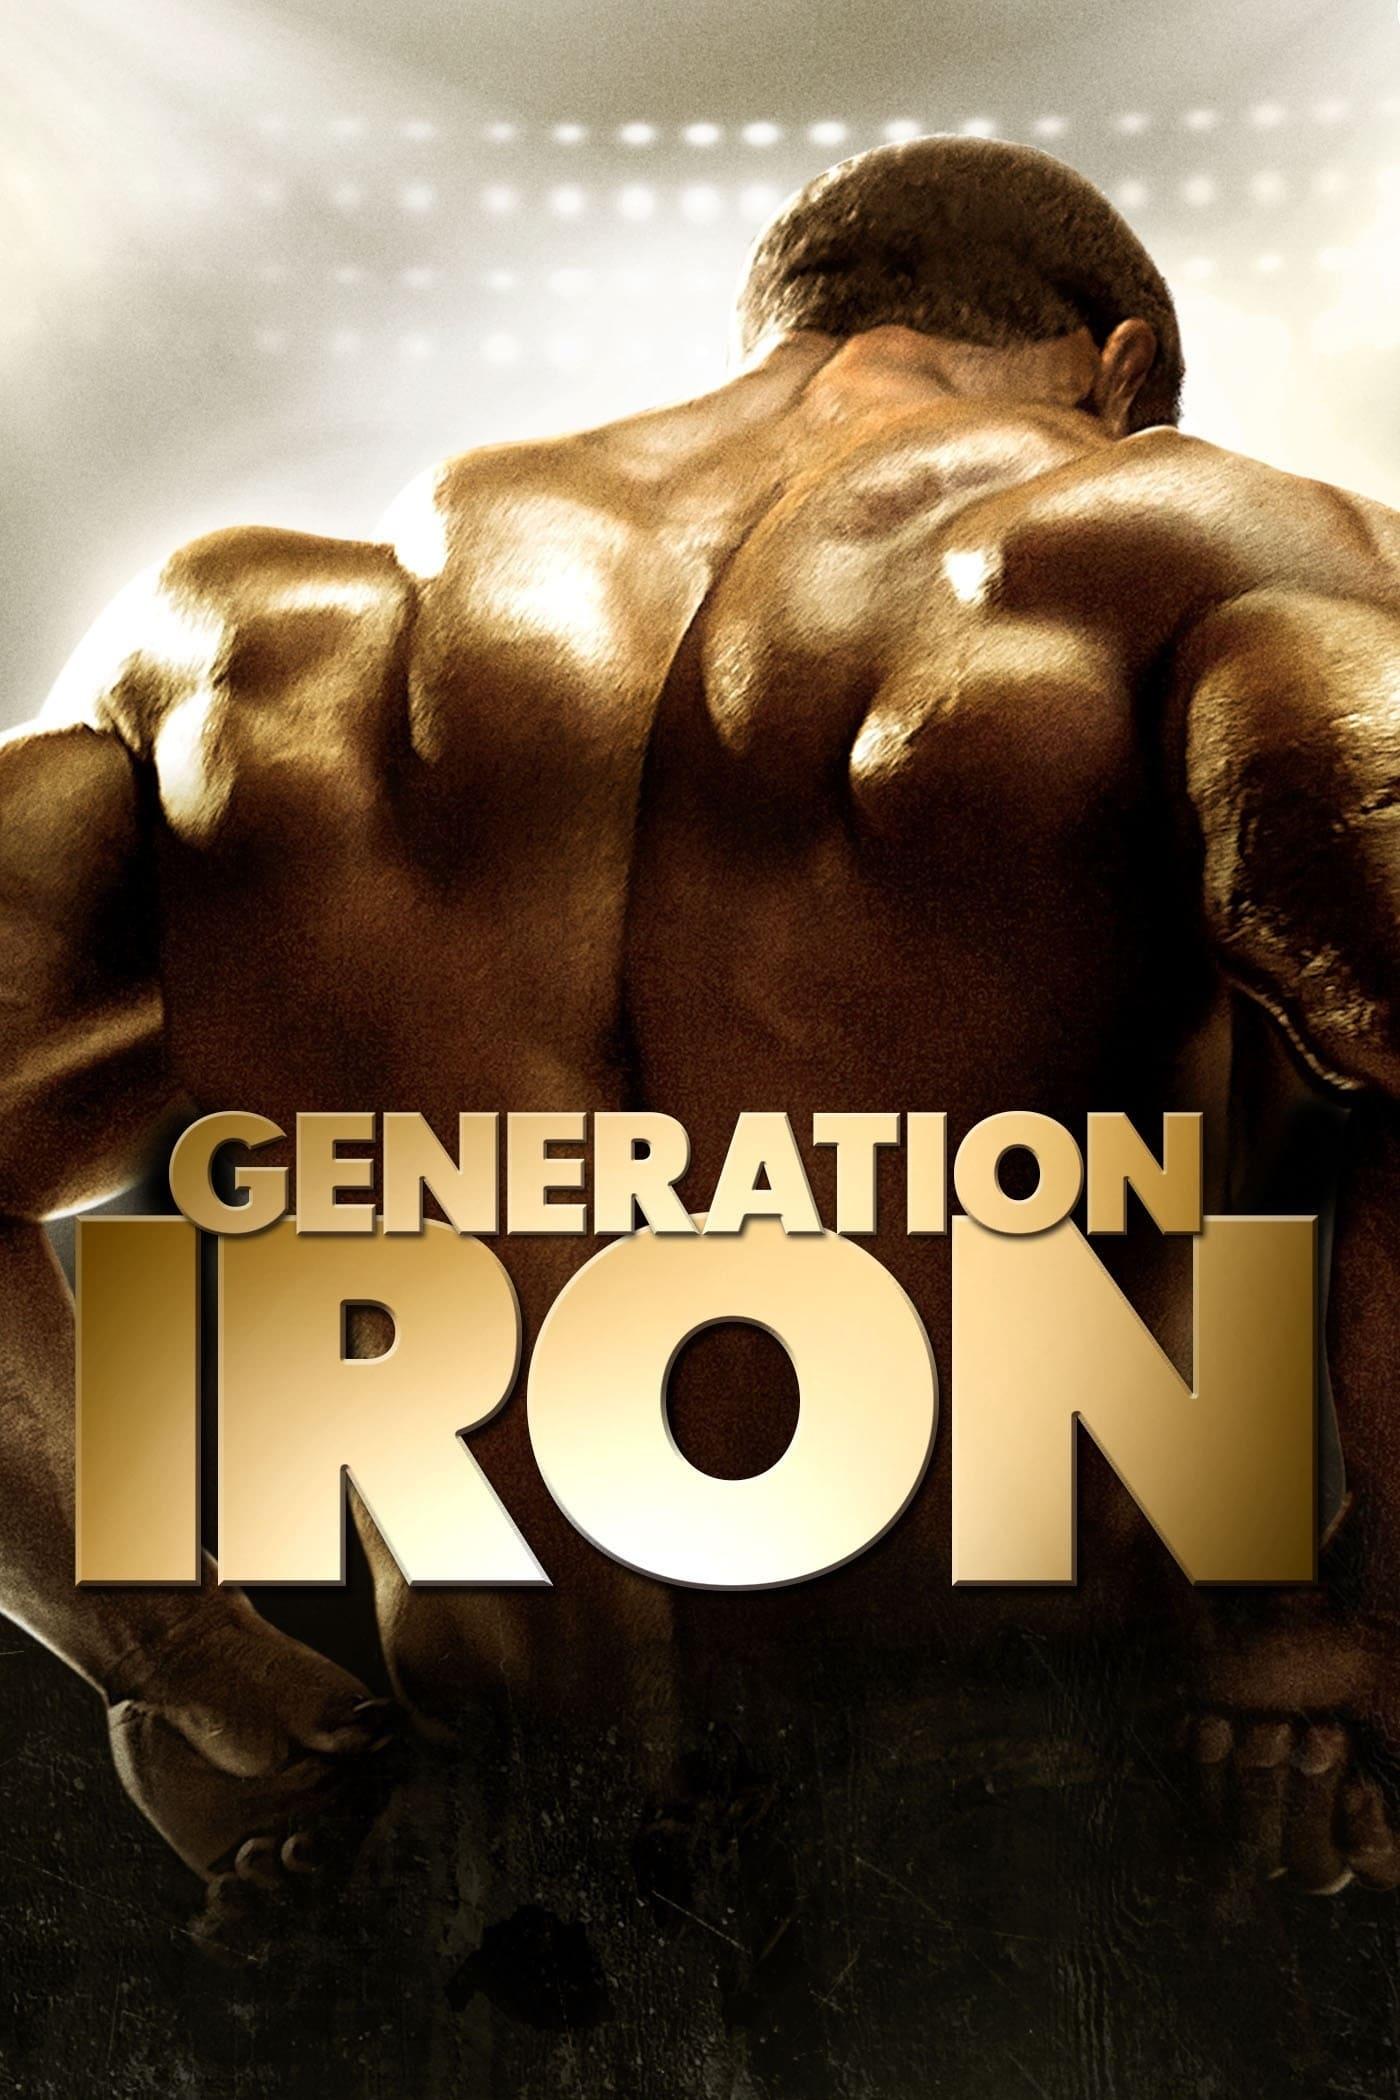 Generation Iron poster